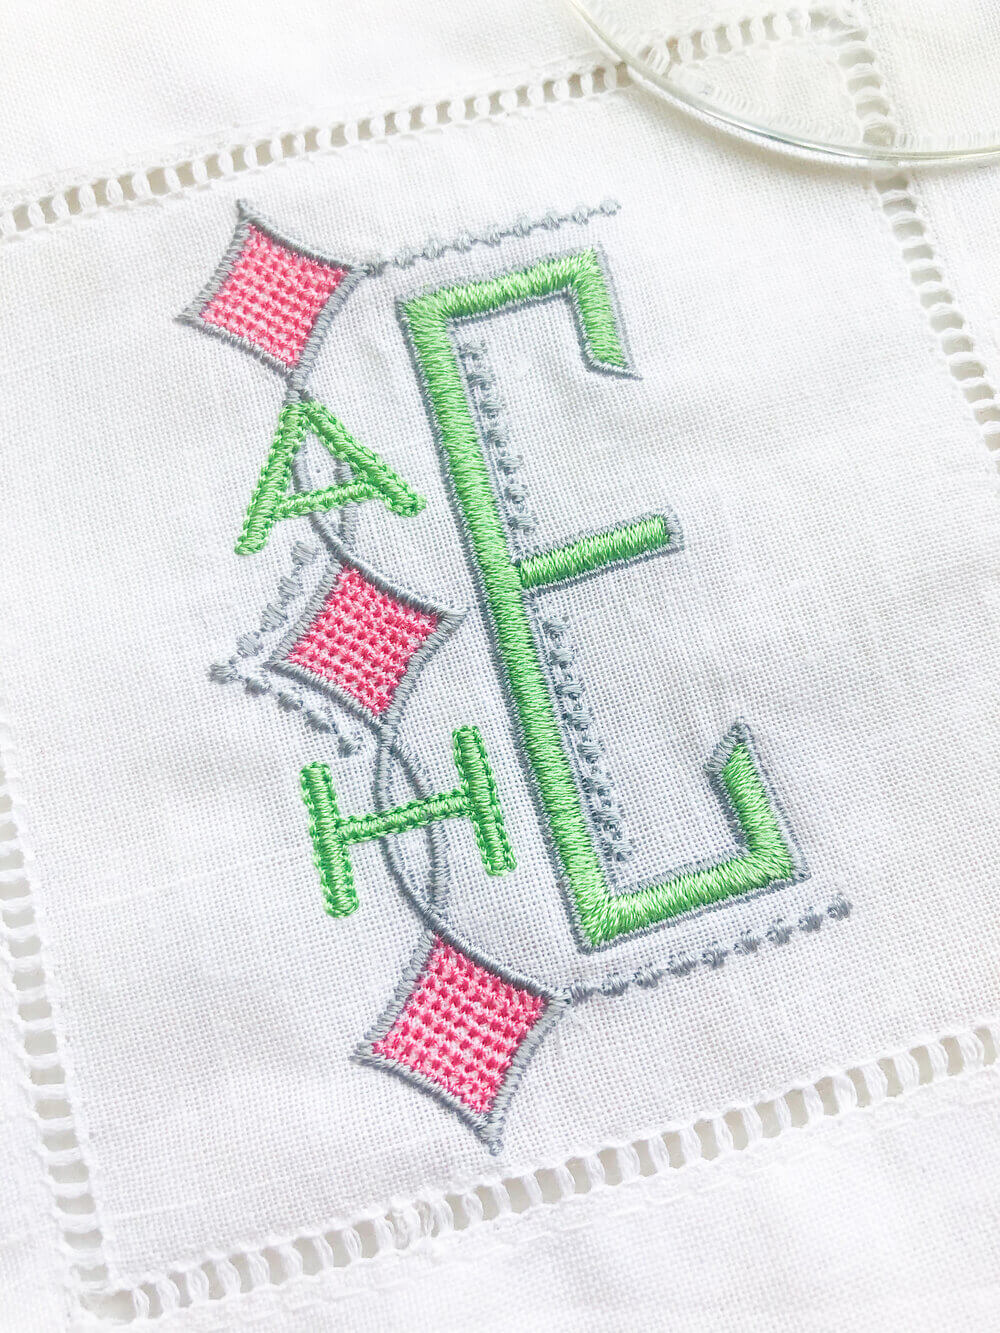 Monogram Retro Font for Embroidery